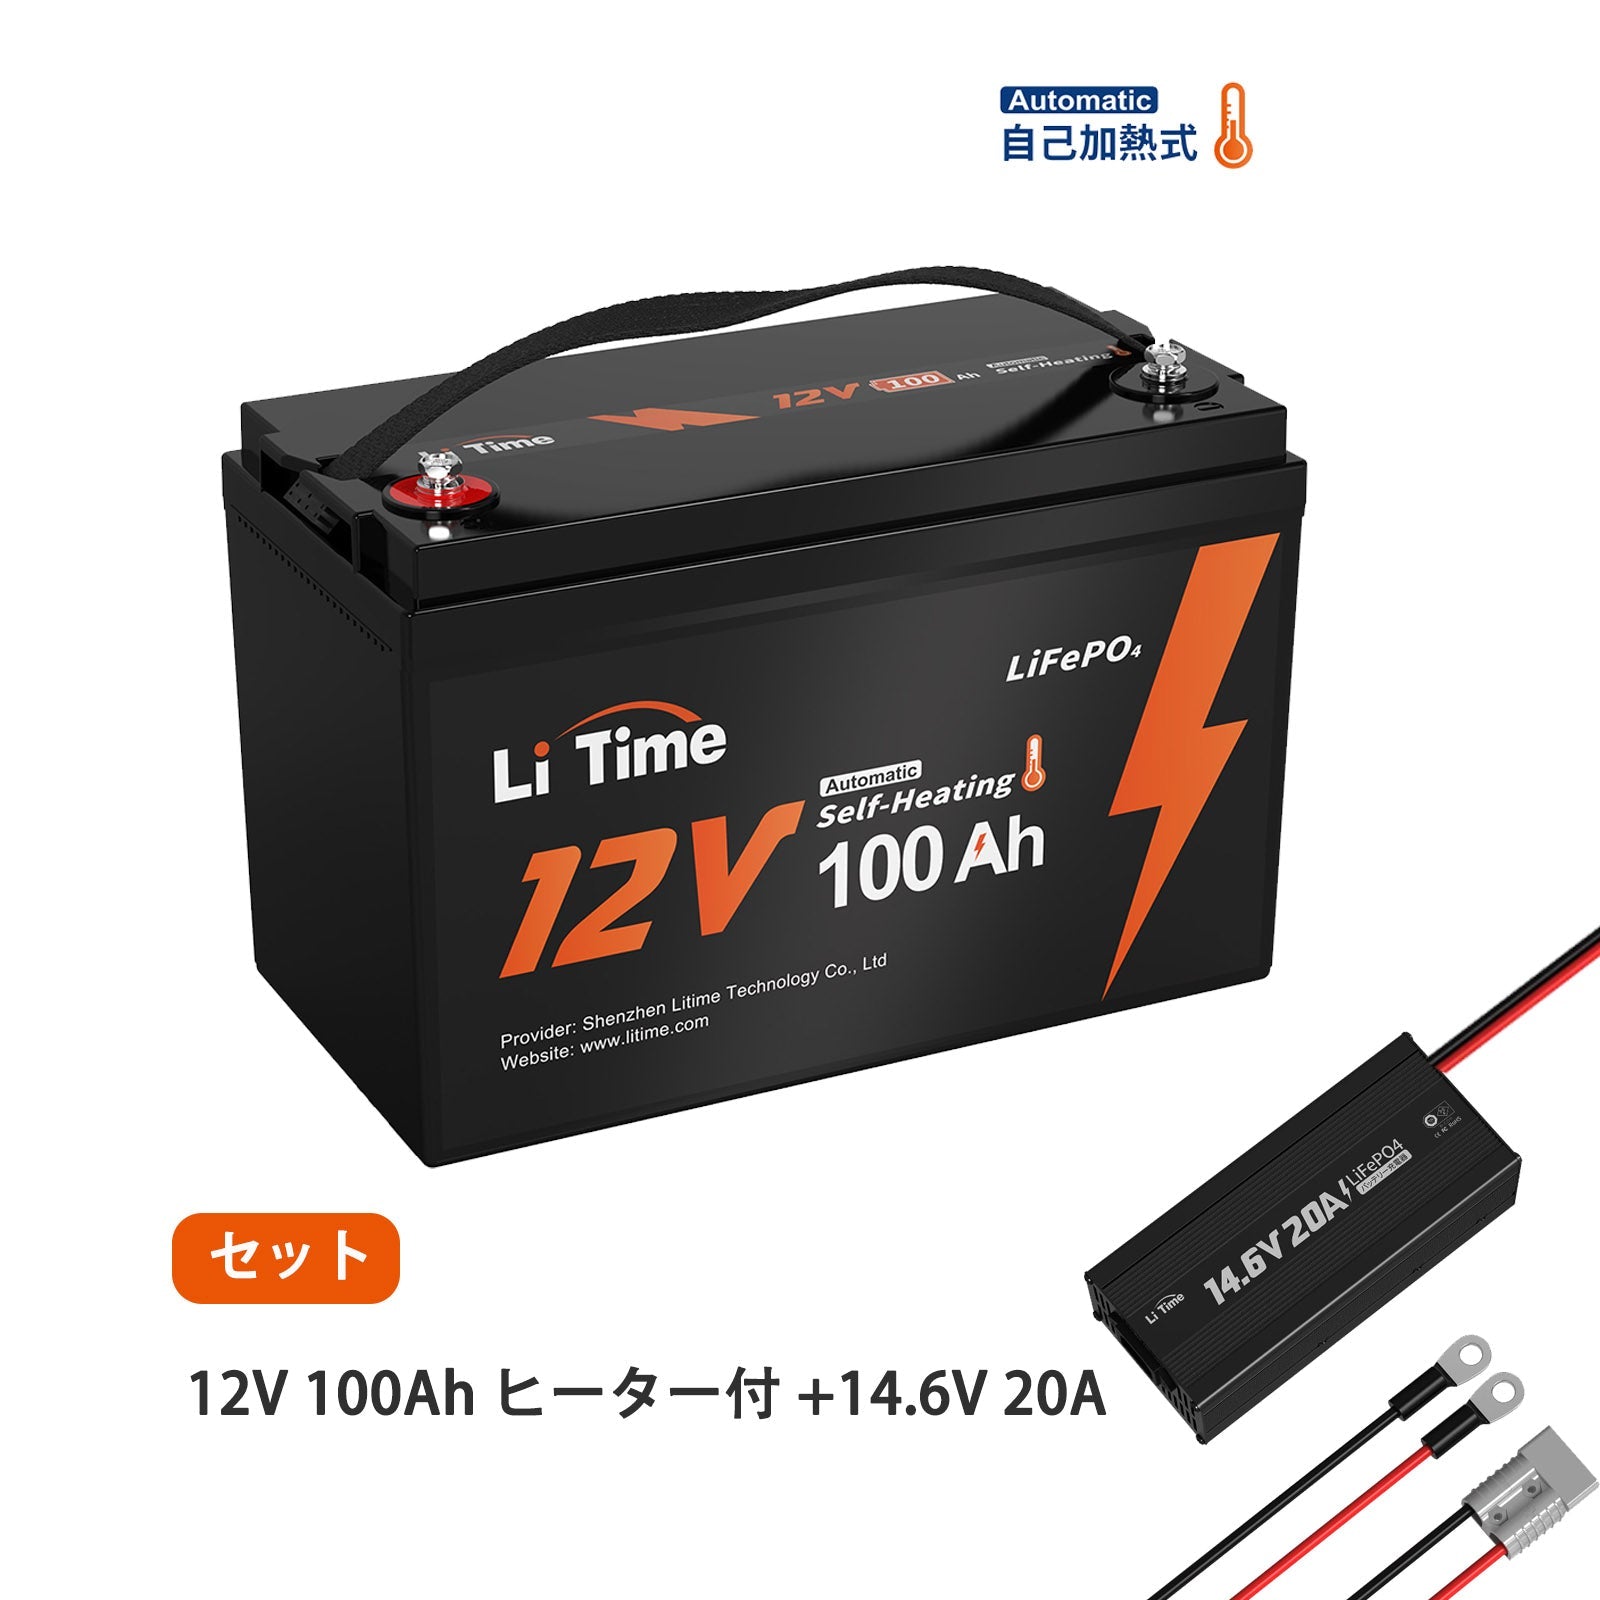 LiTime 自己加熱機能 12V 100Ahヒーター付LiFePO4リチウムバッテリー LiTime-JP